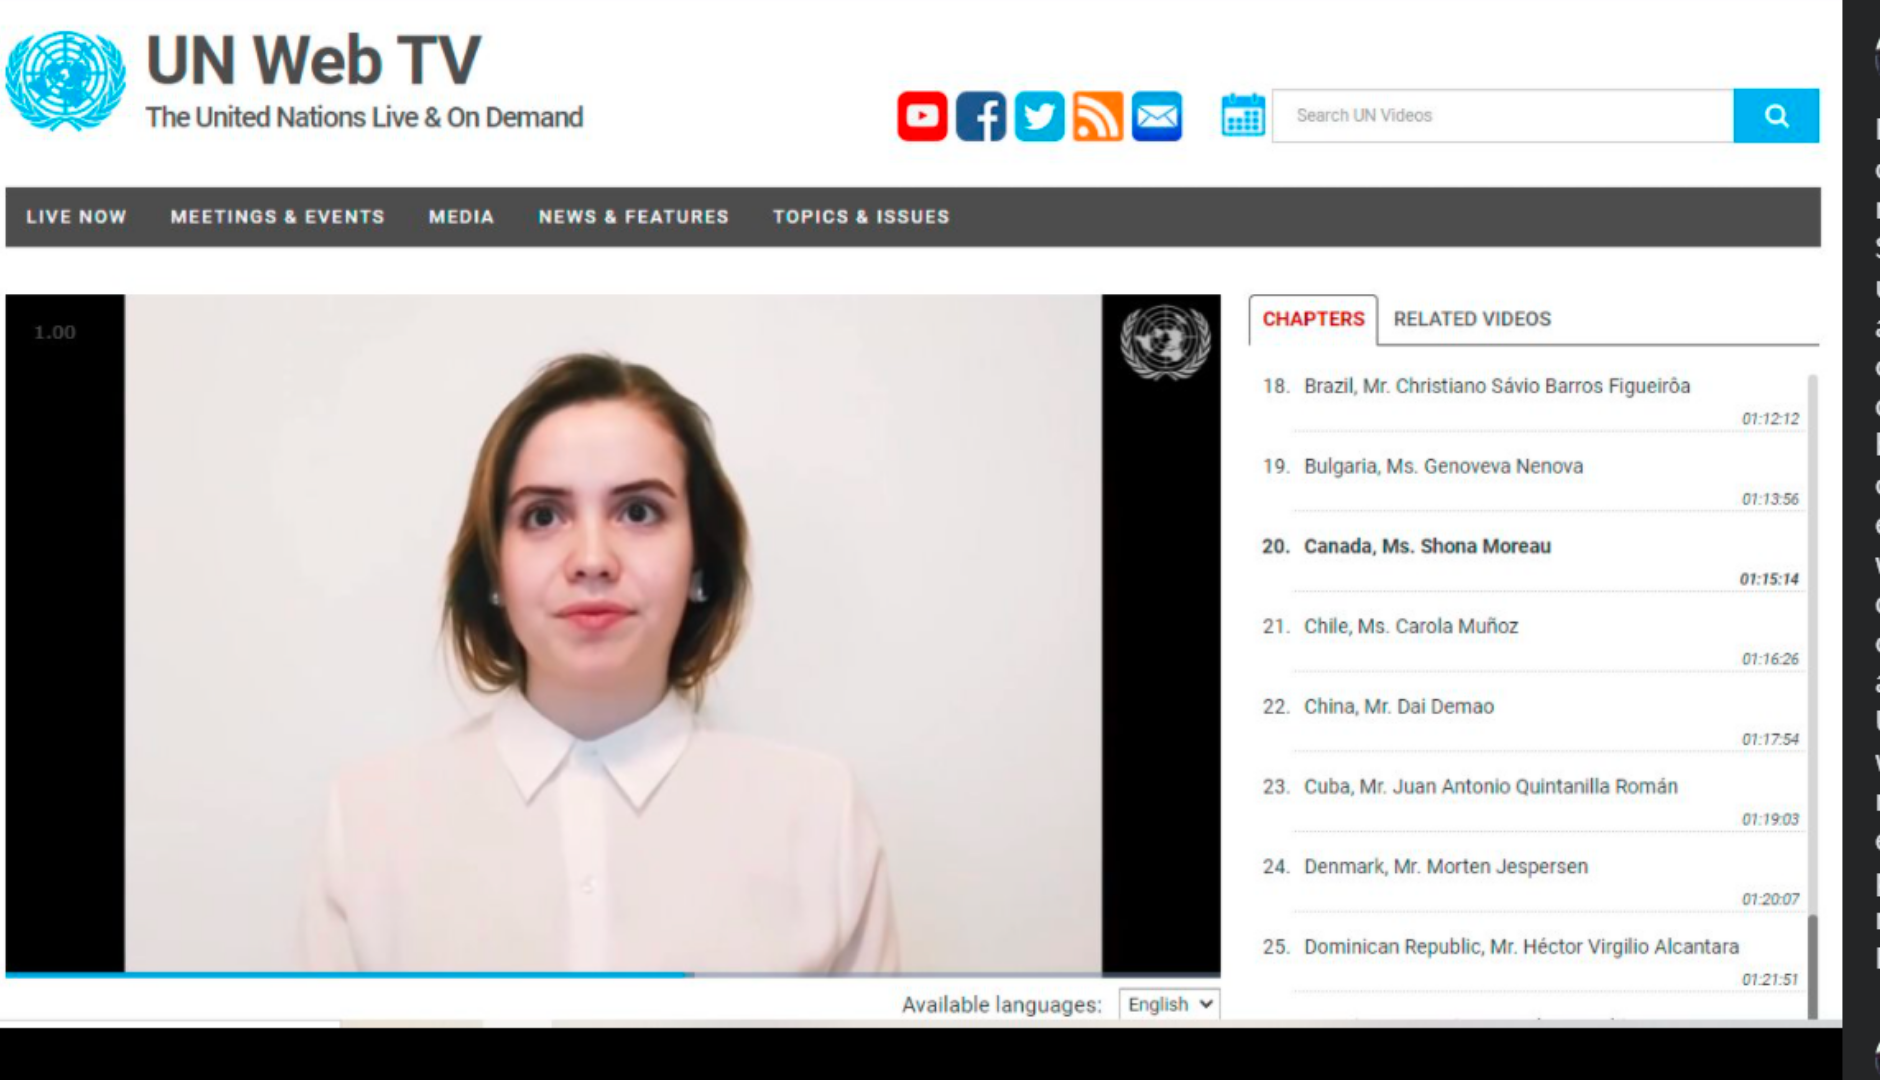 Computer screen showing UN Web TV website, featuring a headshot of Shona